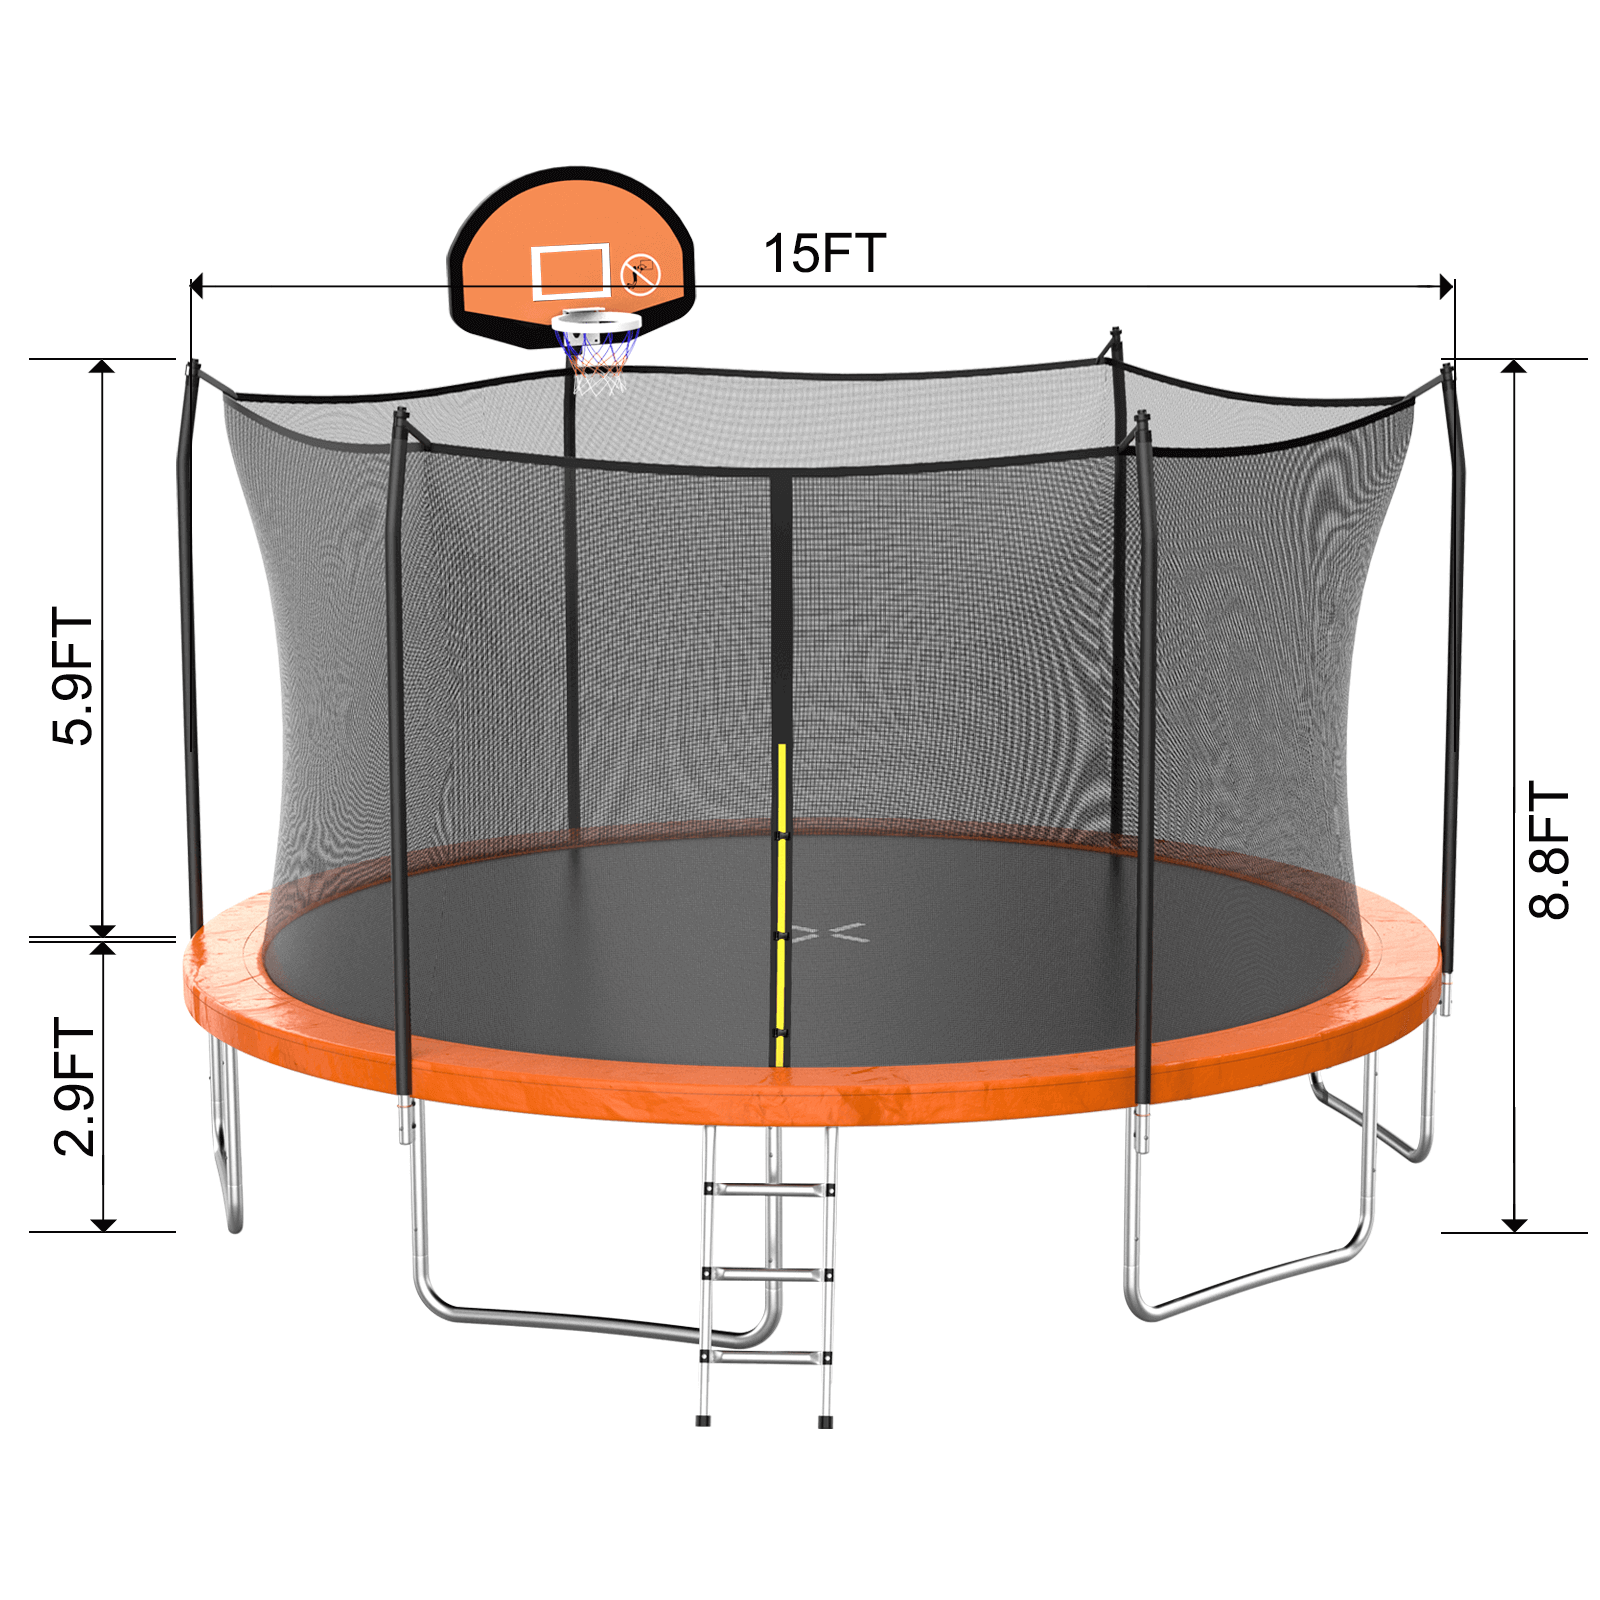 15ft trampoline size aotob